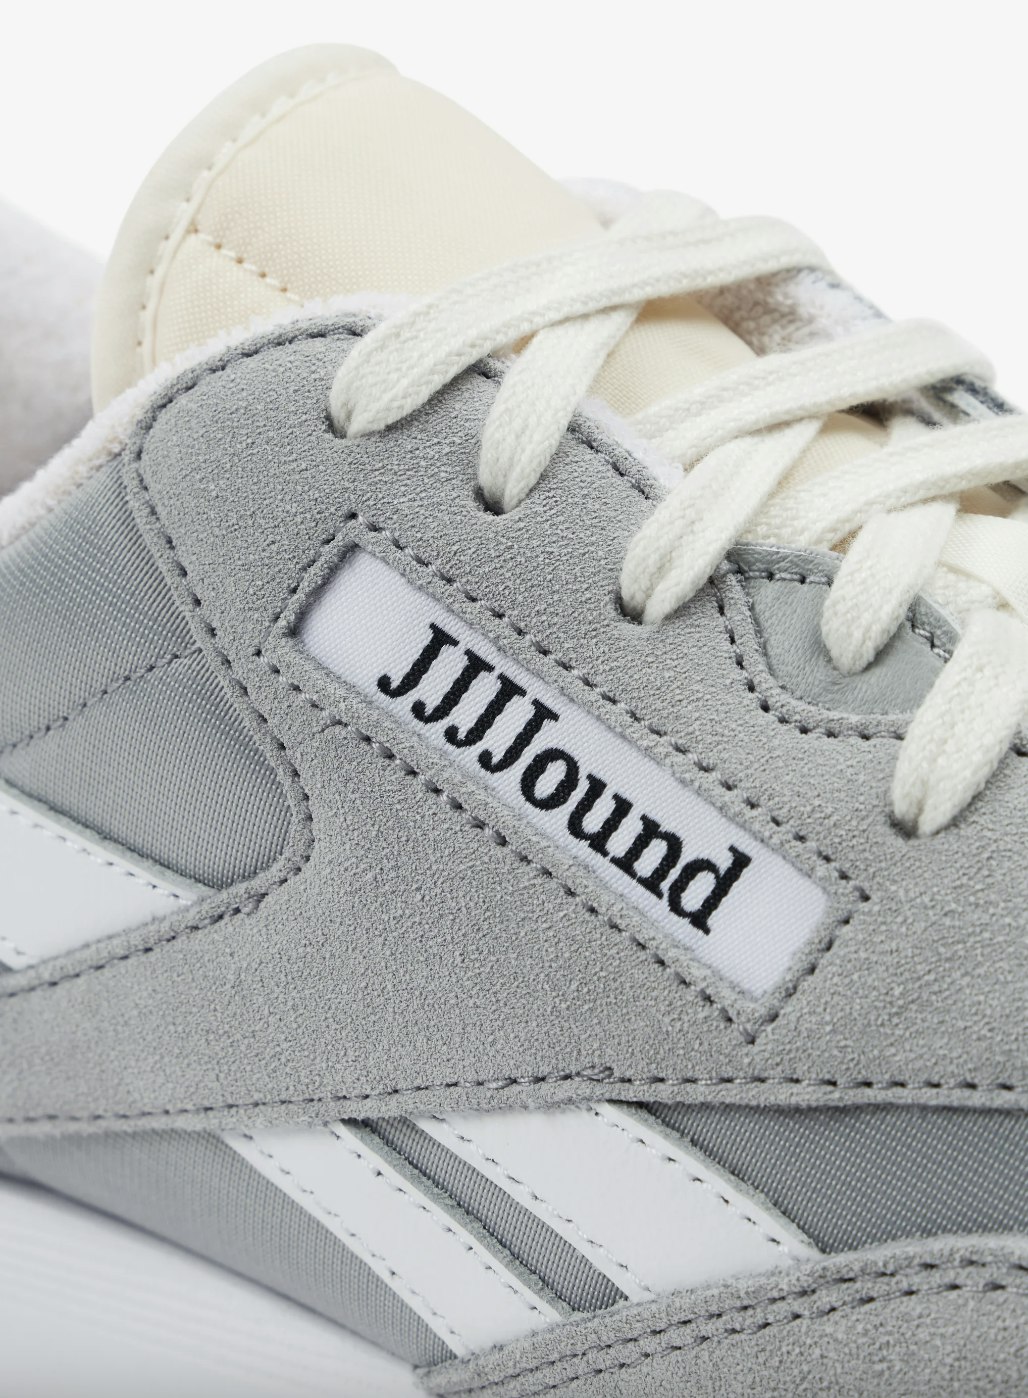 JJJJound x Reebok Classic Leather Nylon "Grey"